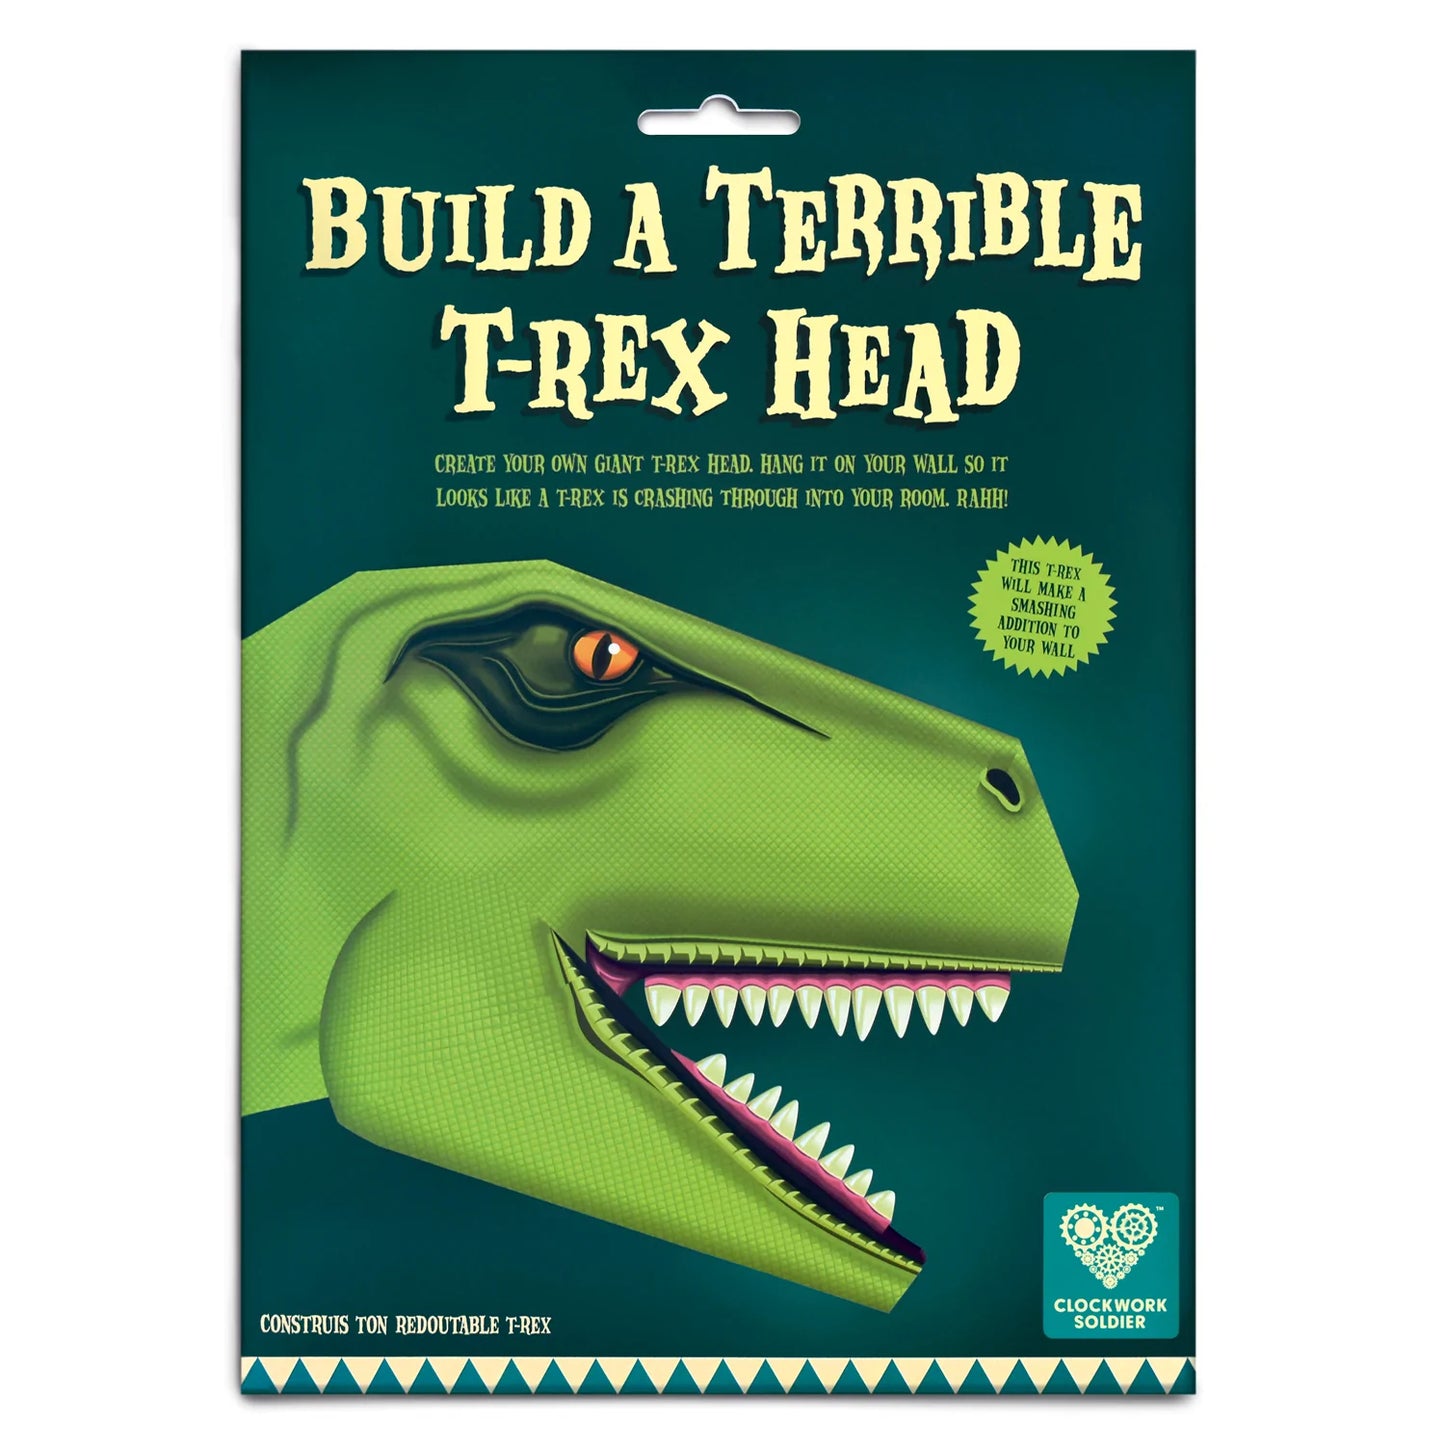 Build a Terrible T-Rex Head Activity Kit